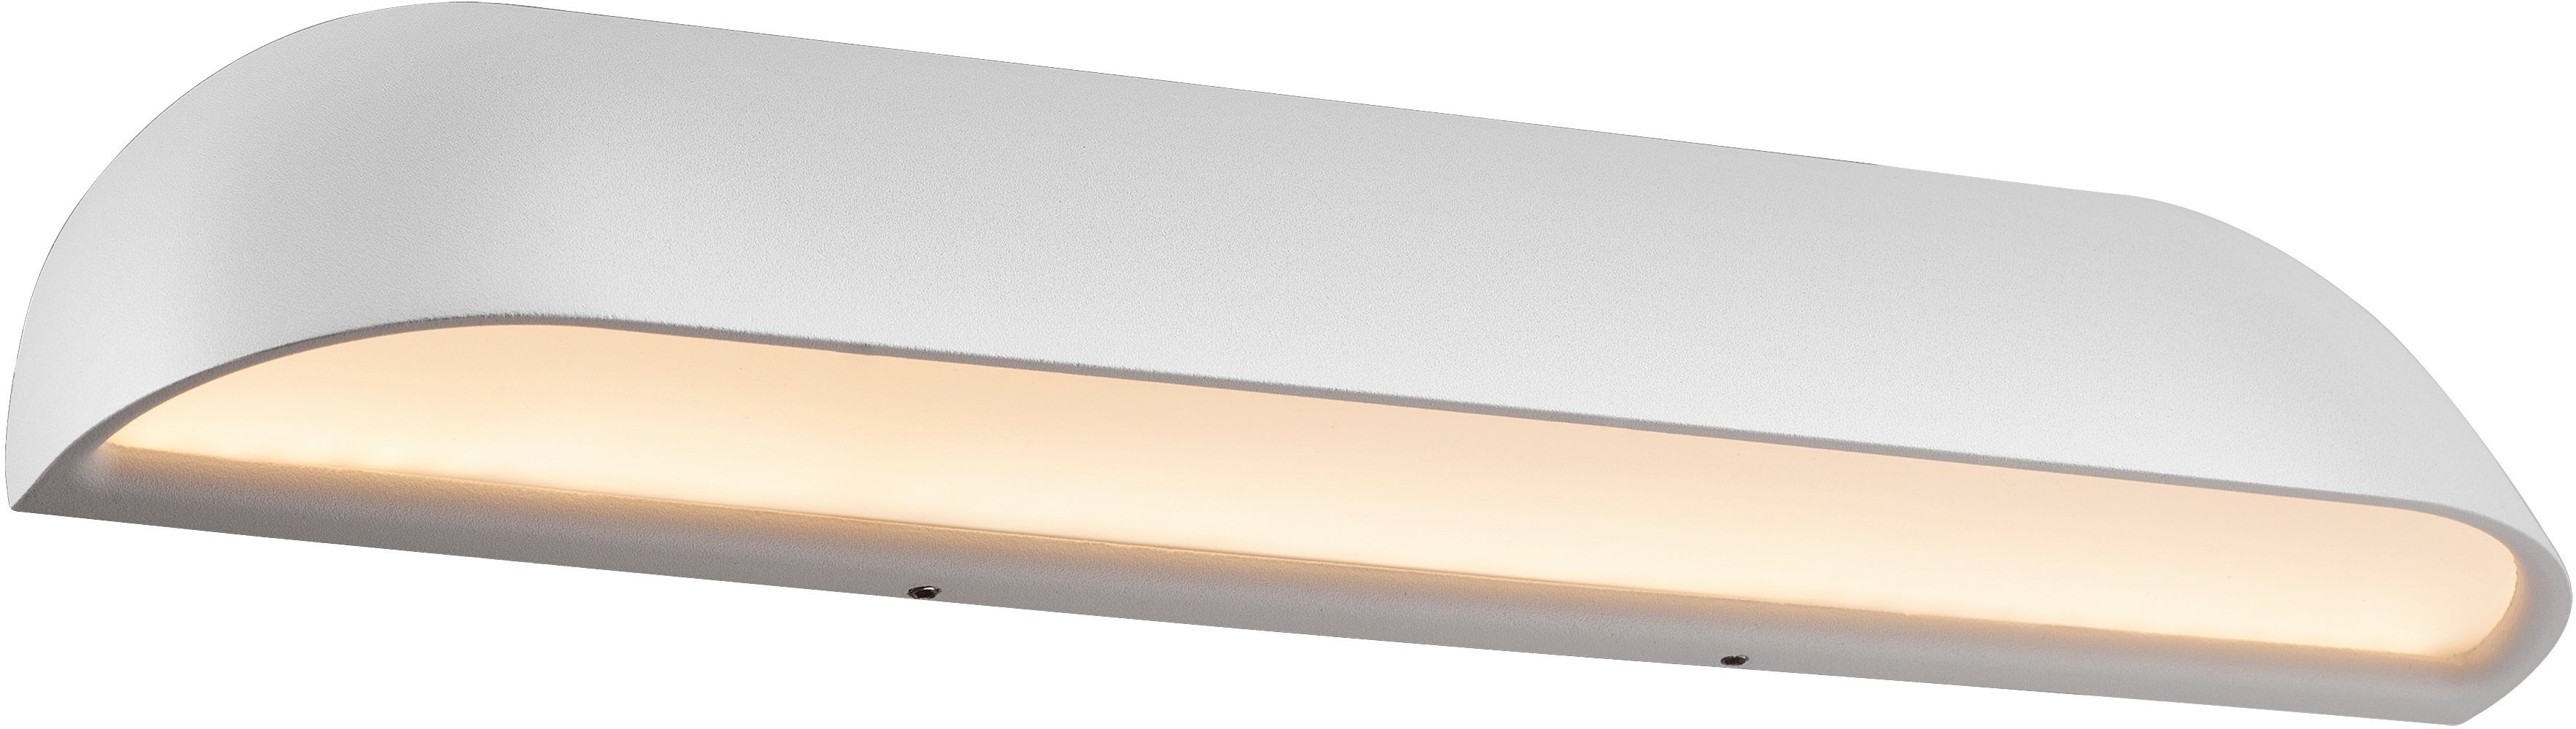 Nordlux LED Wandleuchte FRONT, LED fest integriert, Warmweiß, inkl. LED  Modul, 5 Jahre Garantie